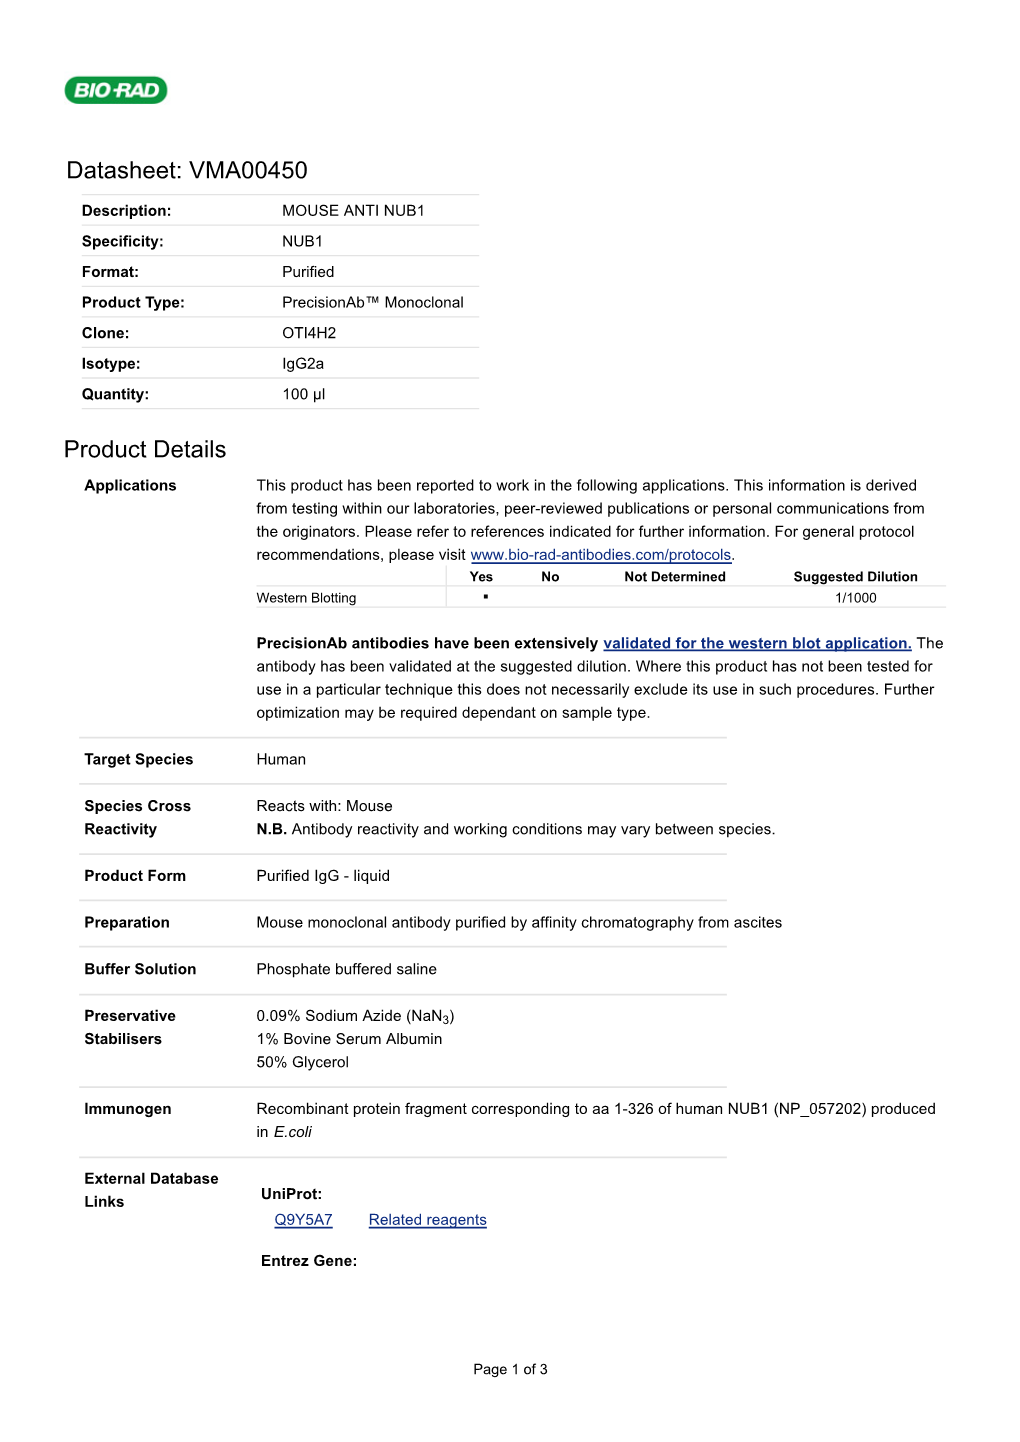 Datasheet: VMA00450 Product Details